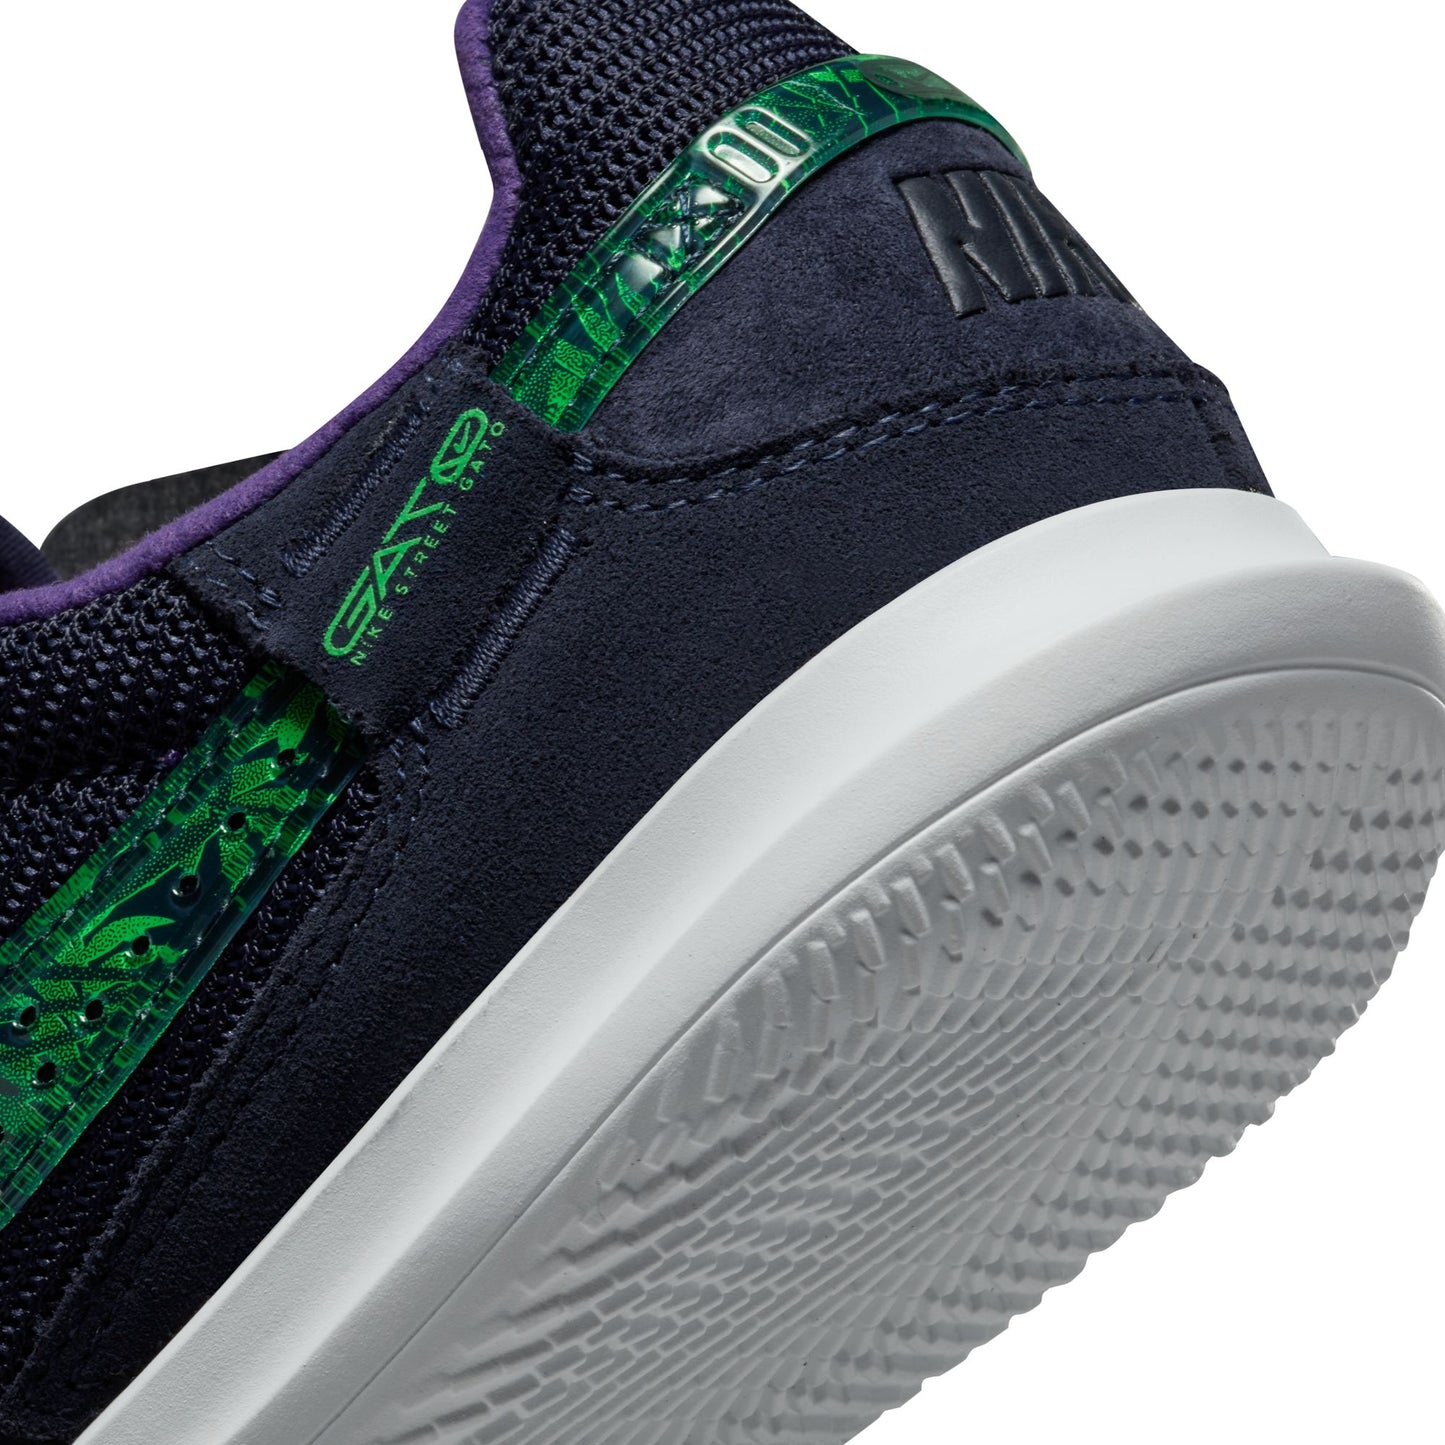 Junior Nike Streetgato IC [Blackened Blue/Green]